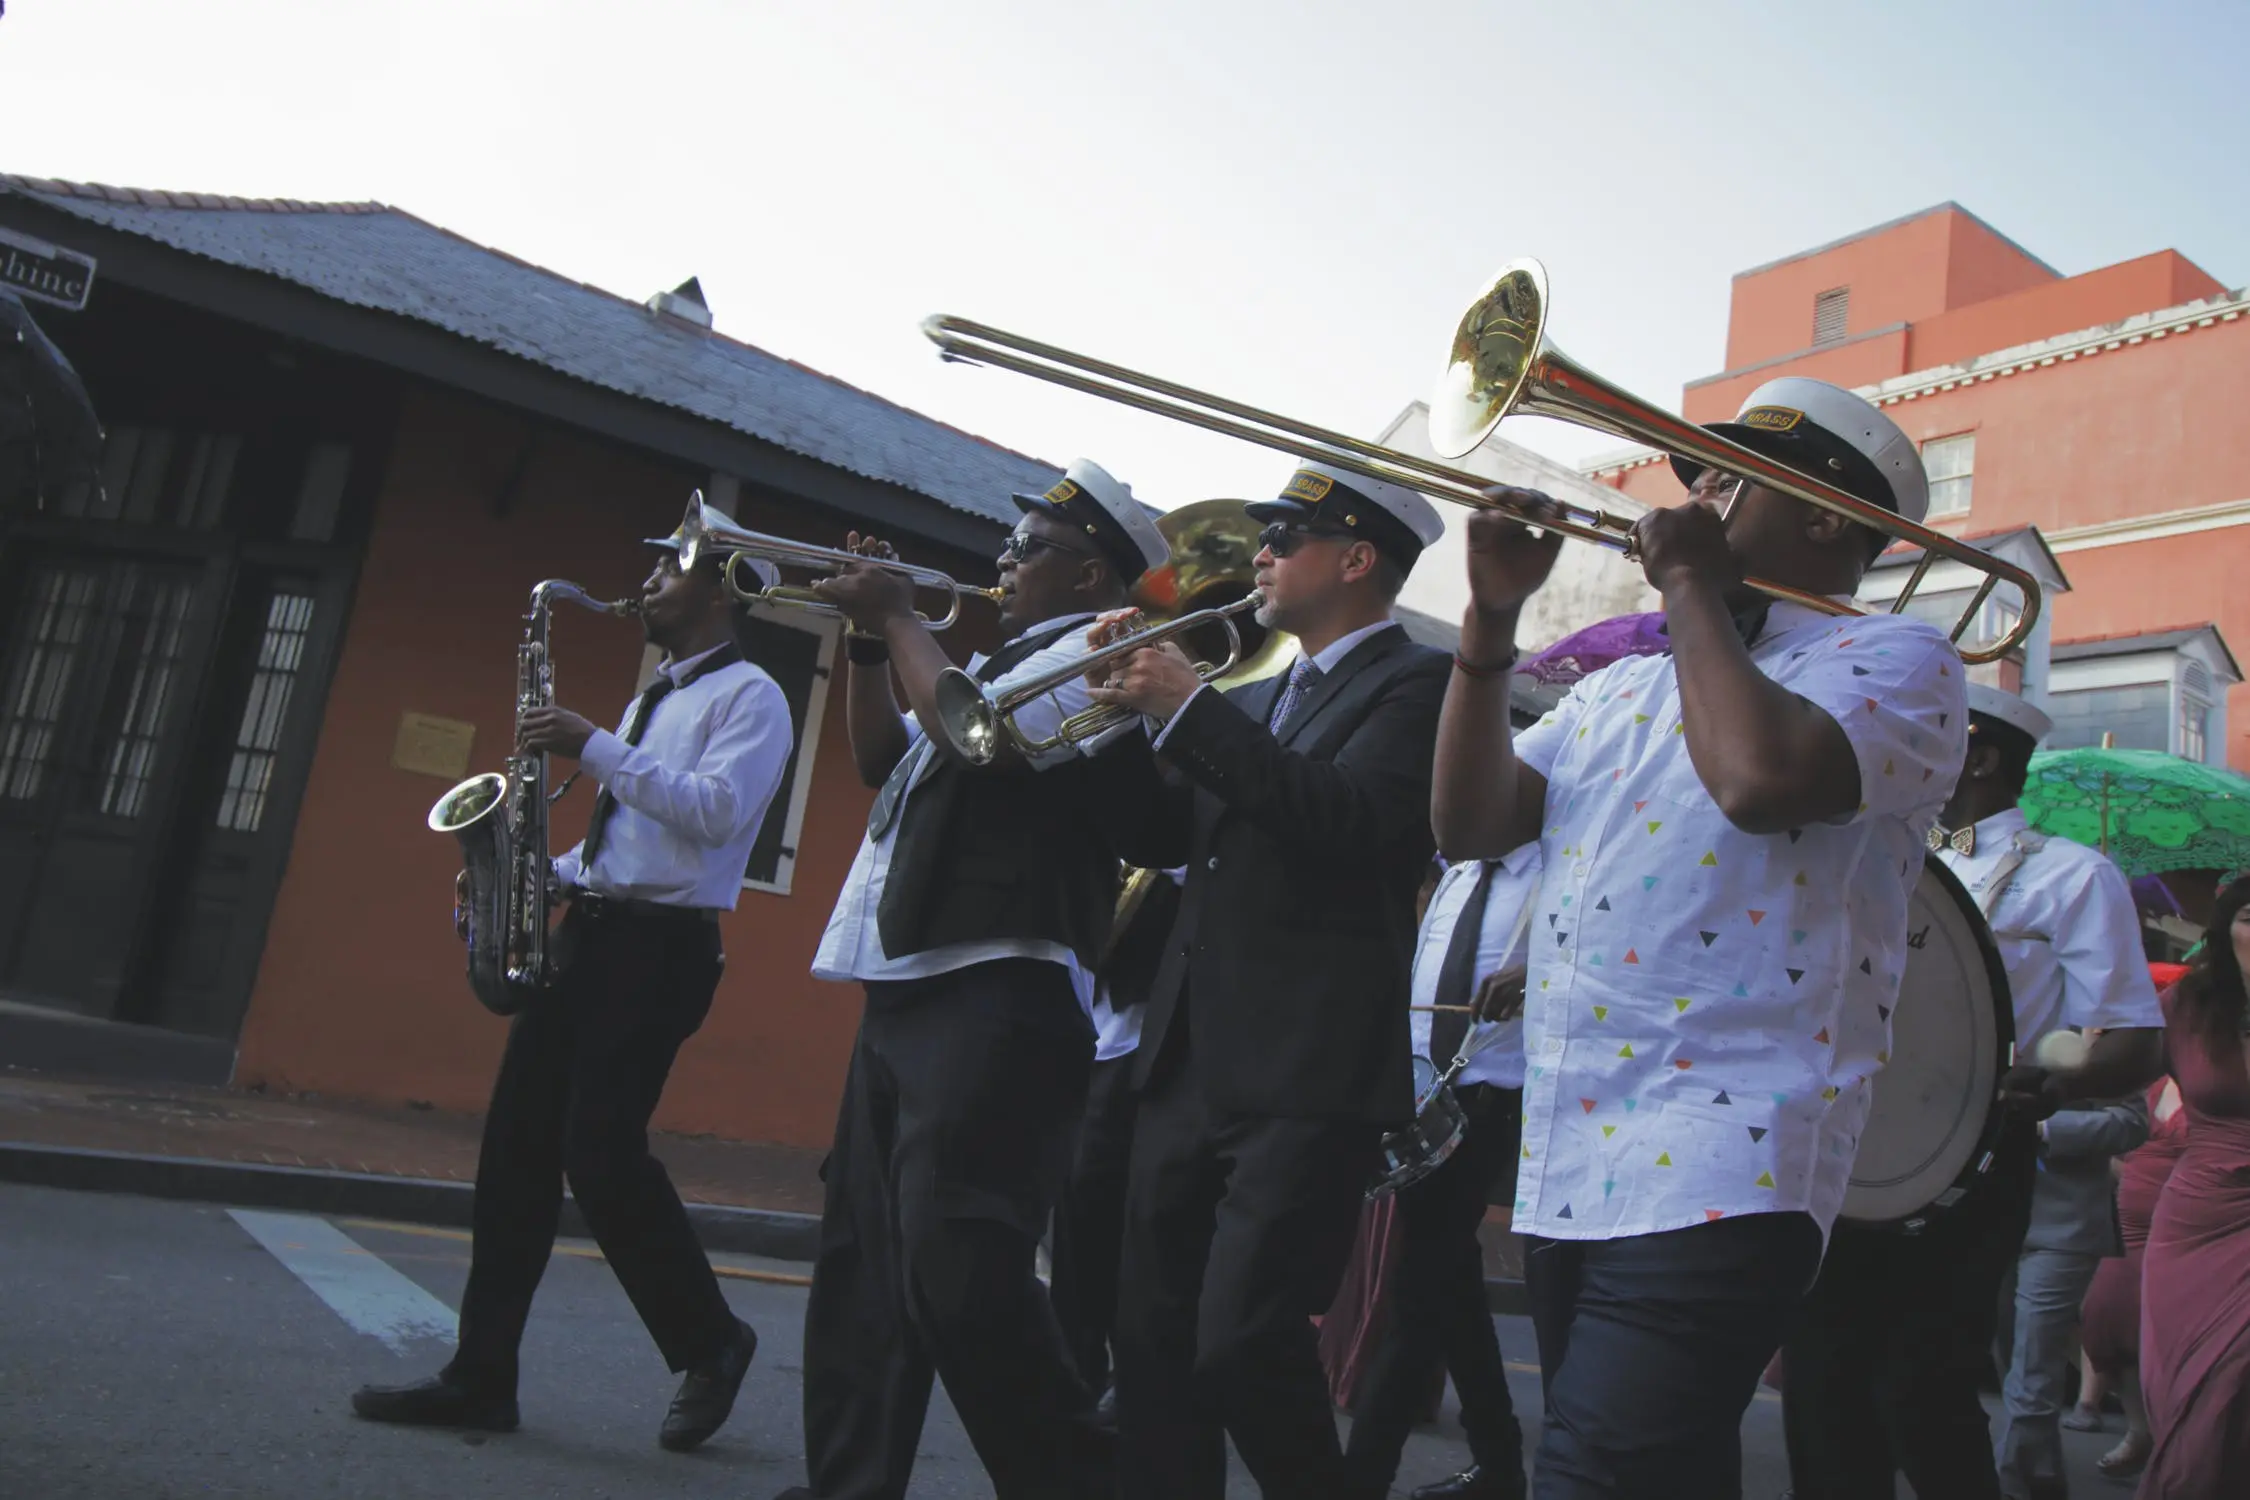 New Orleans Jazz Fest